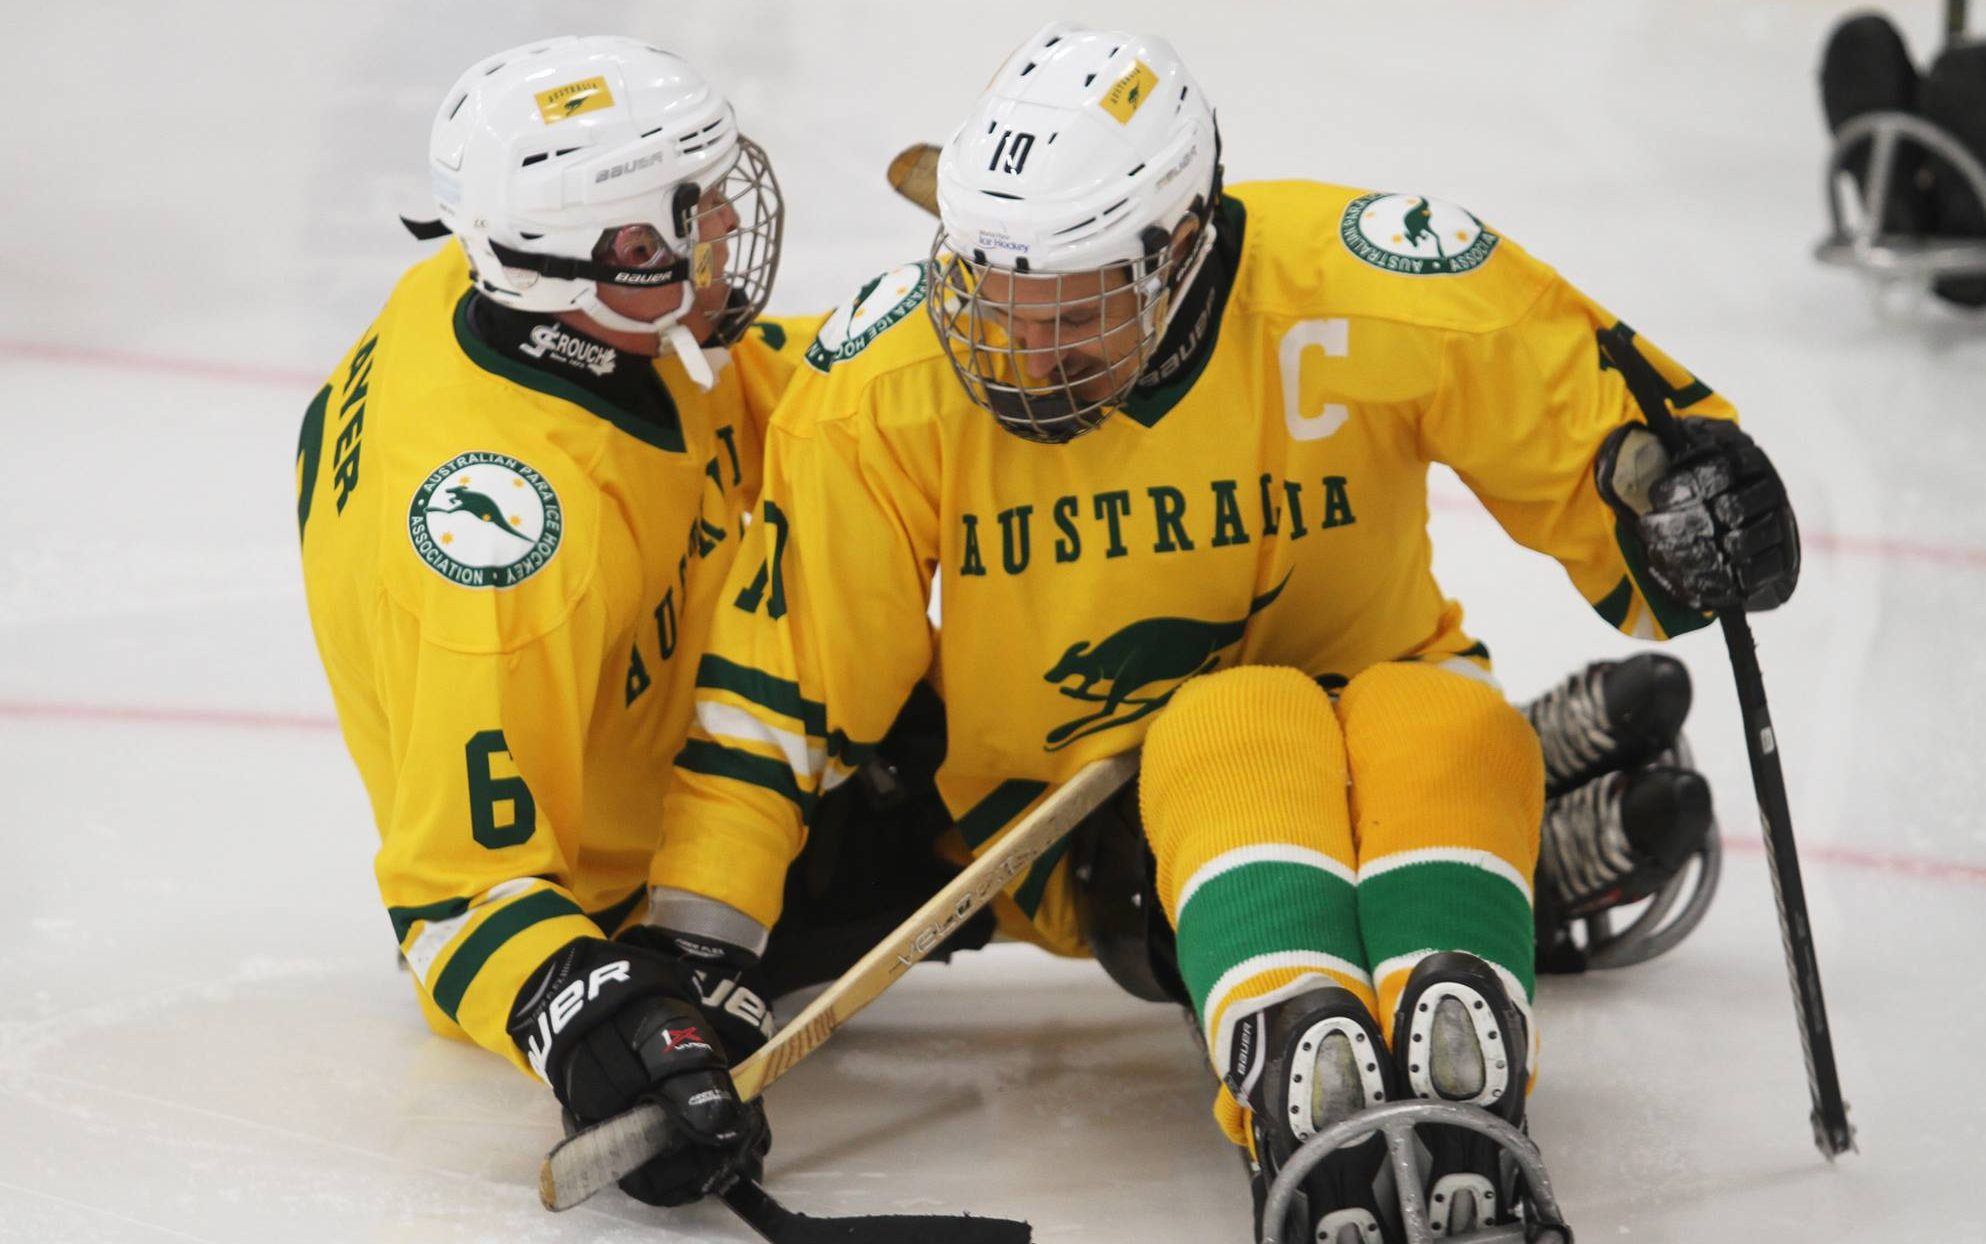 Australia to debut its first men’s Para-ice hockey team